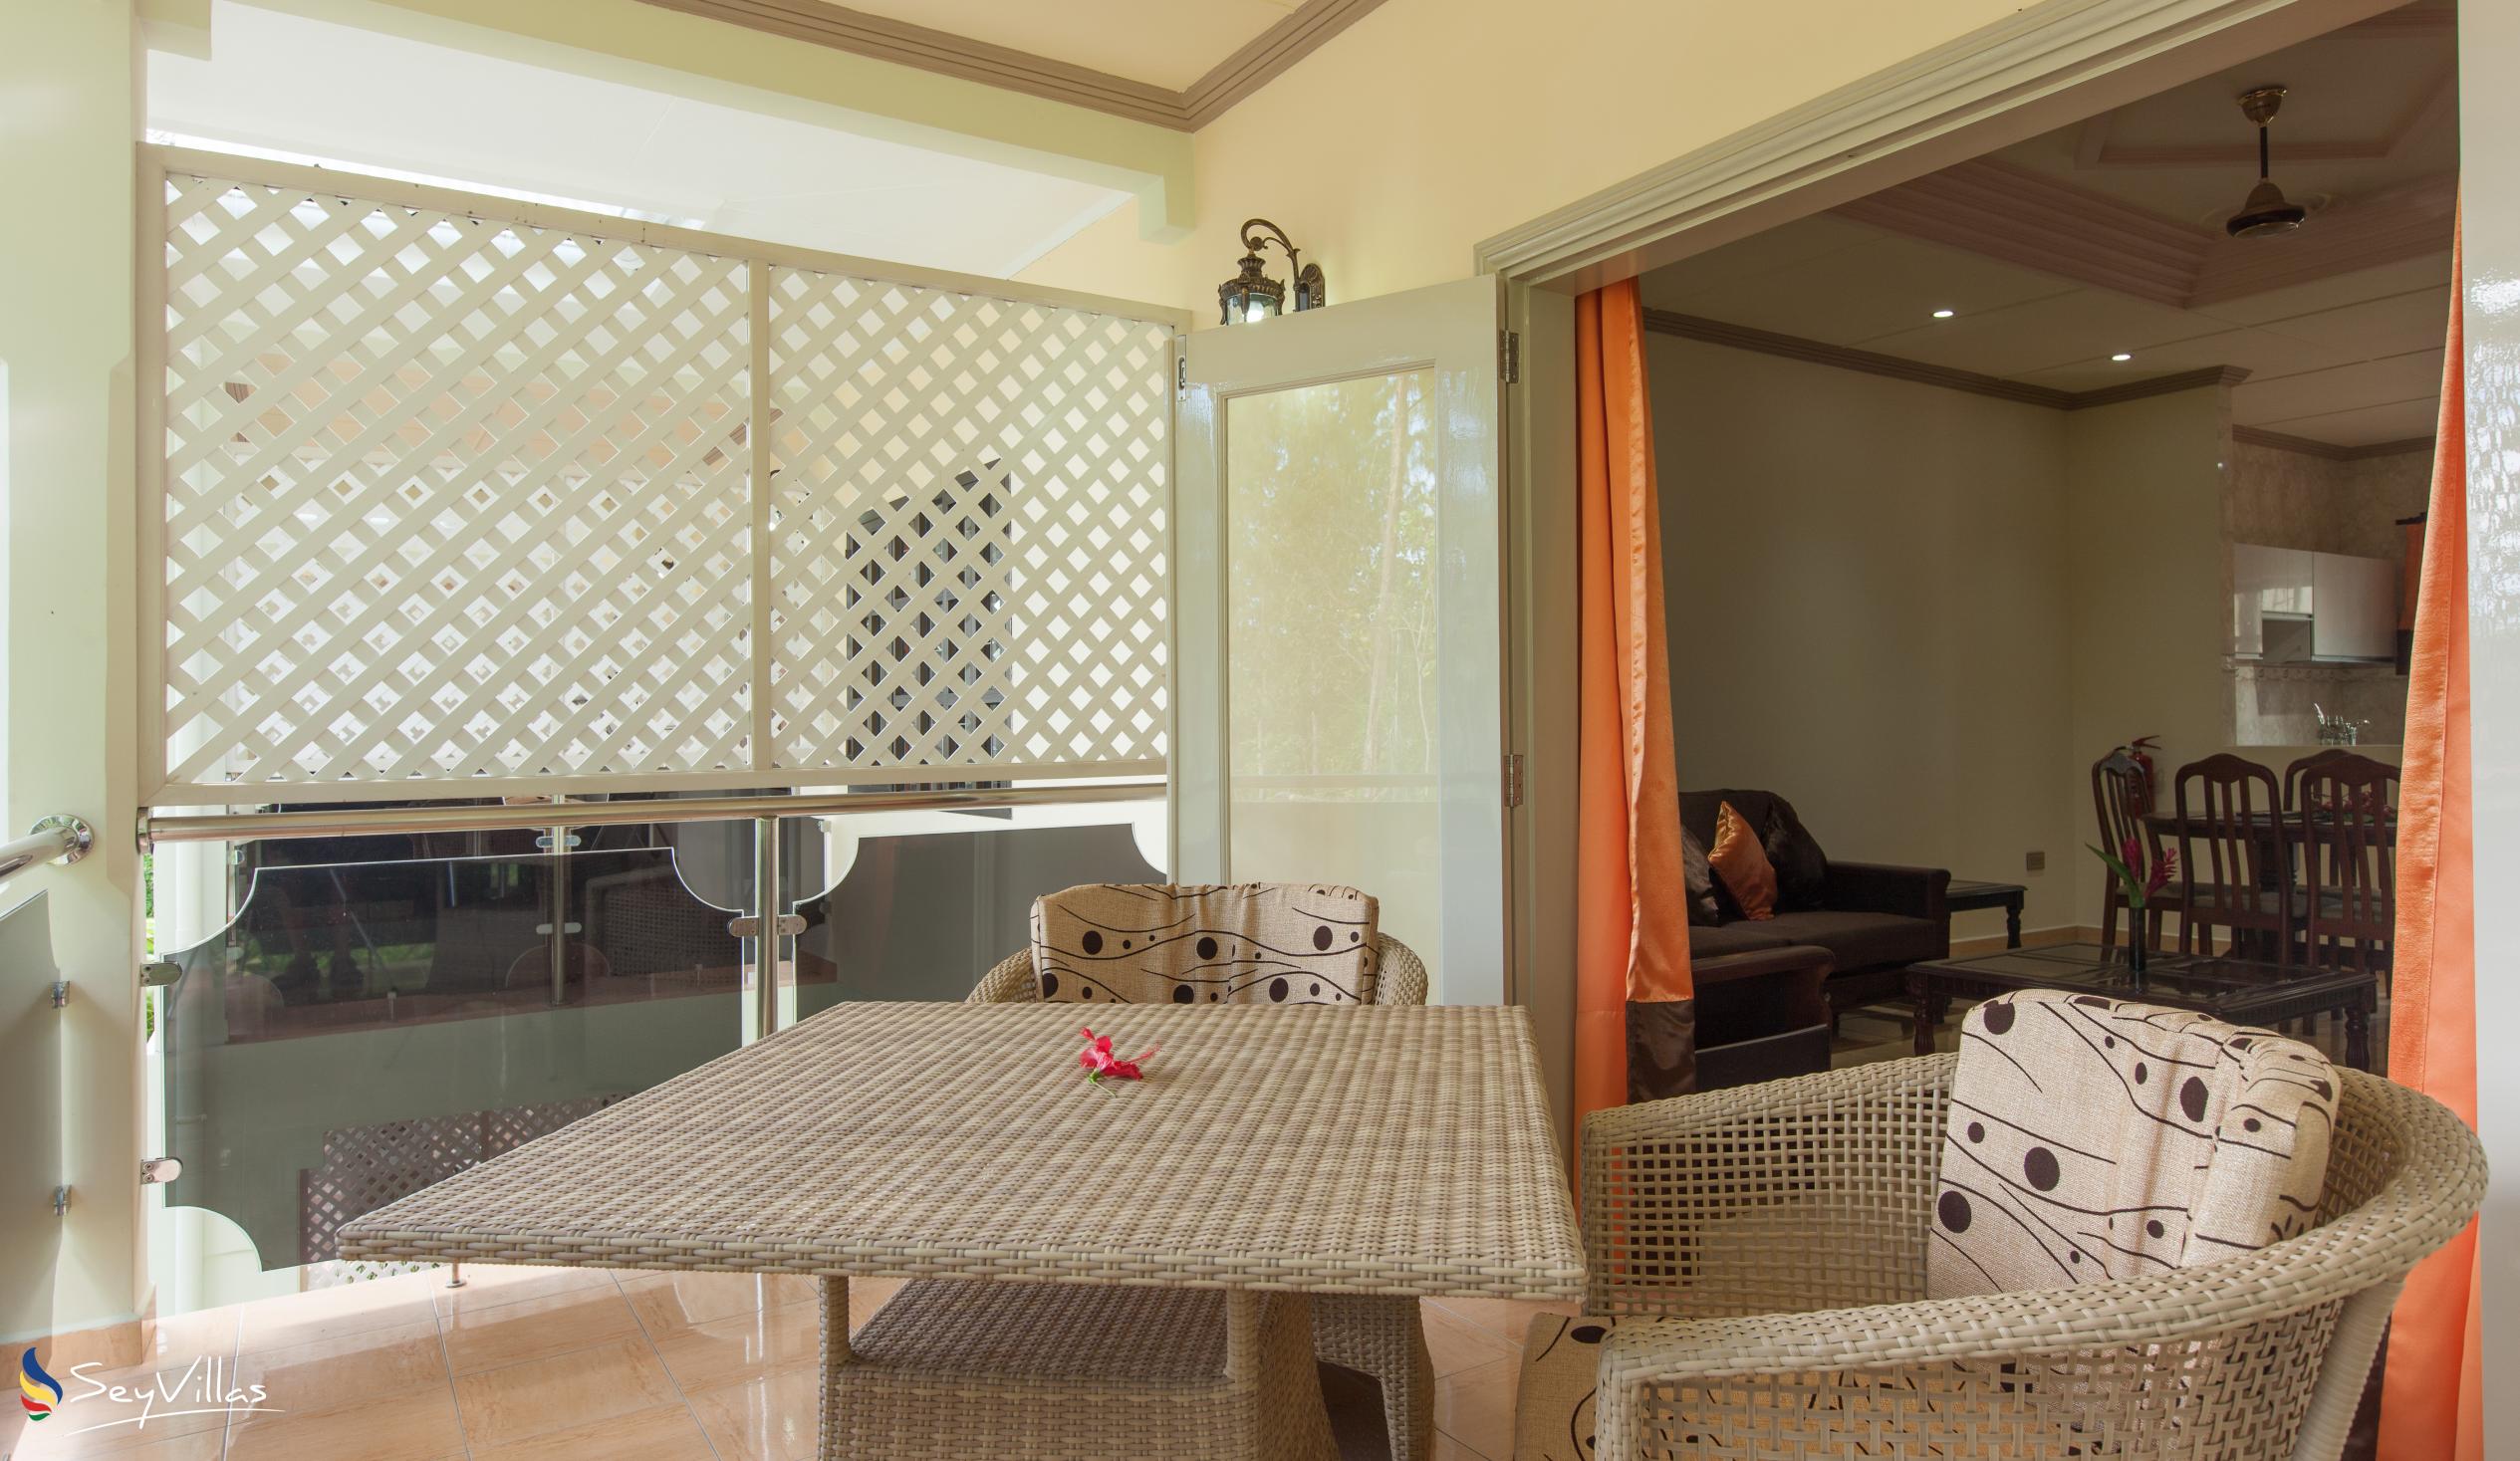 Foto 30: Chez Bea Villa - Appartement 2 chambres - Praslin (Seychelles)